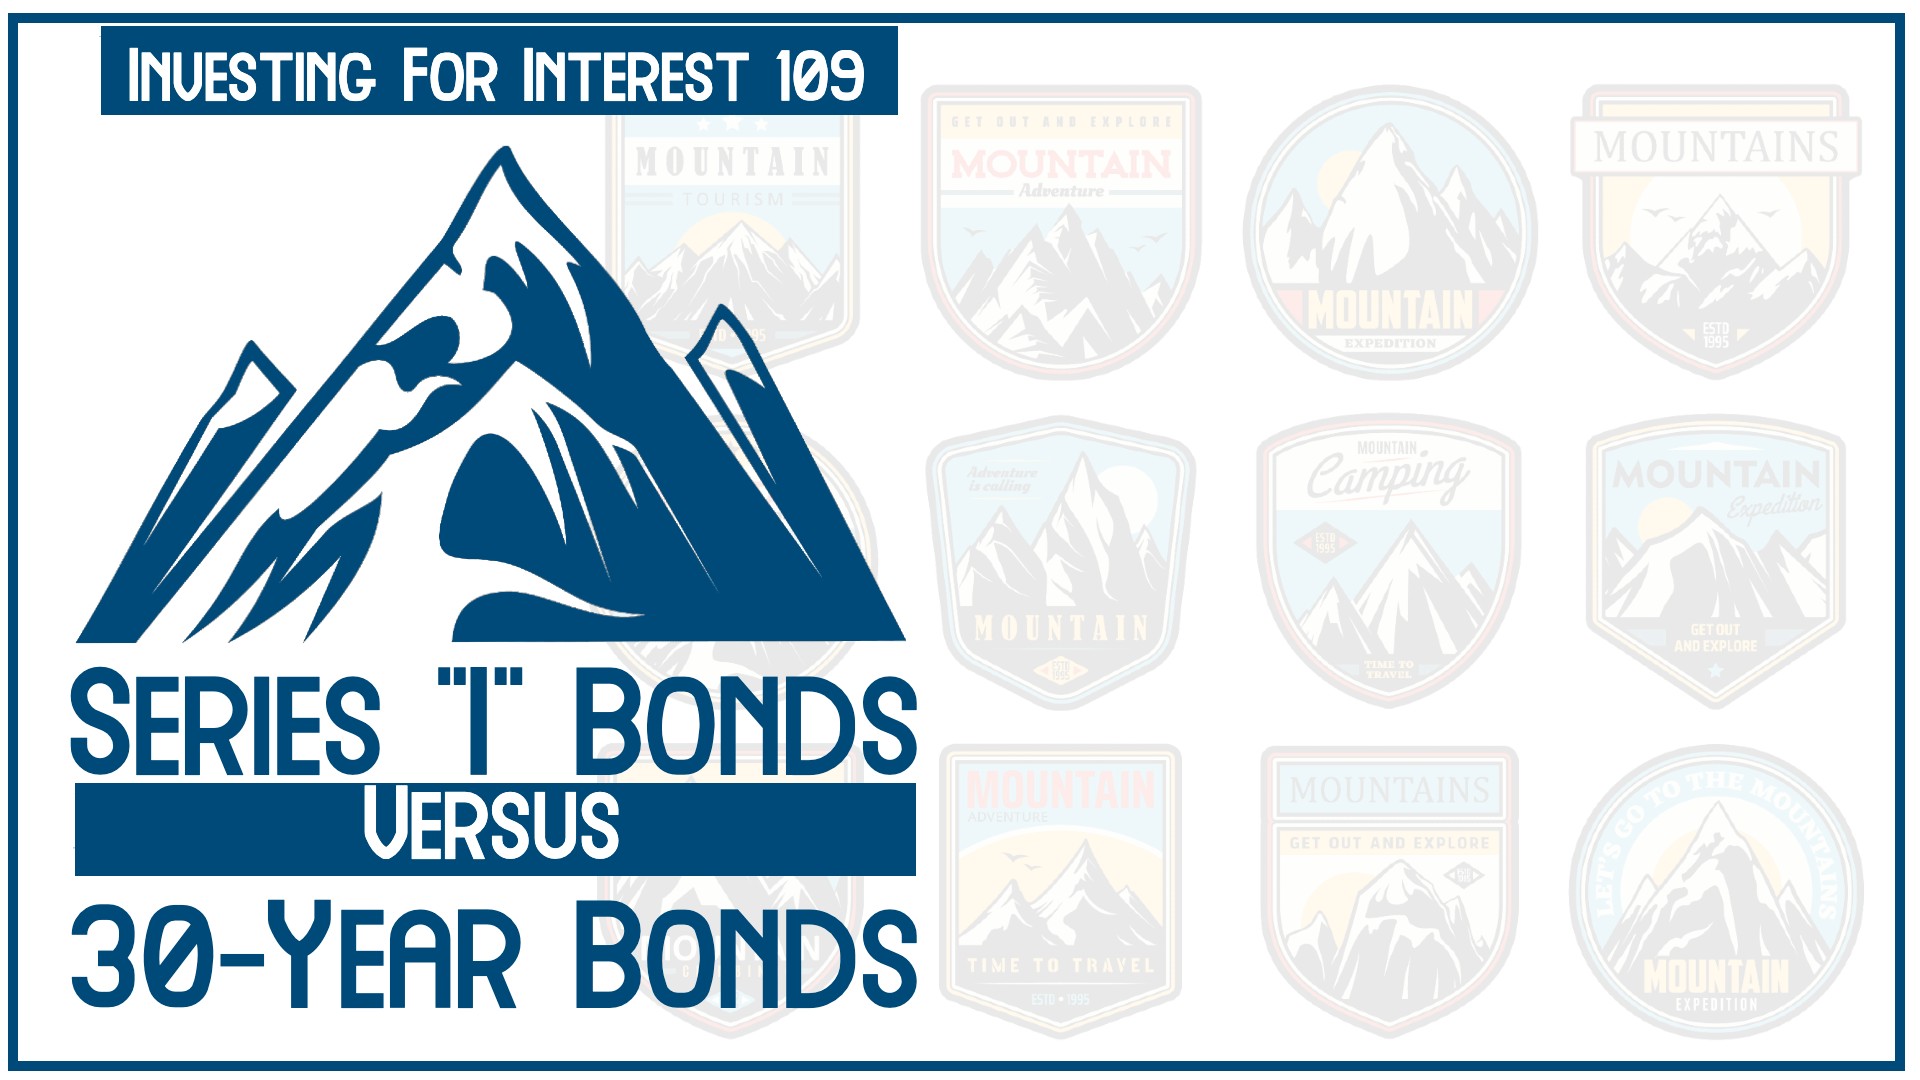 Investing for Interest 109: Series I vs 30-Year Bonds